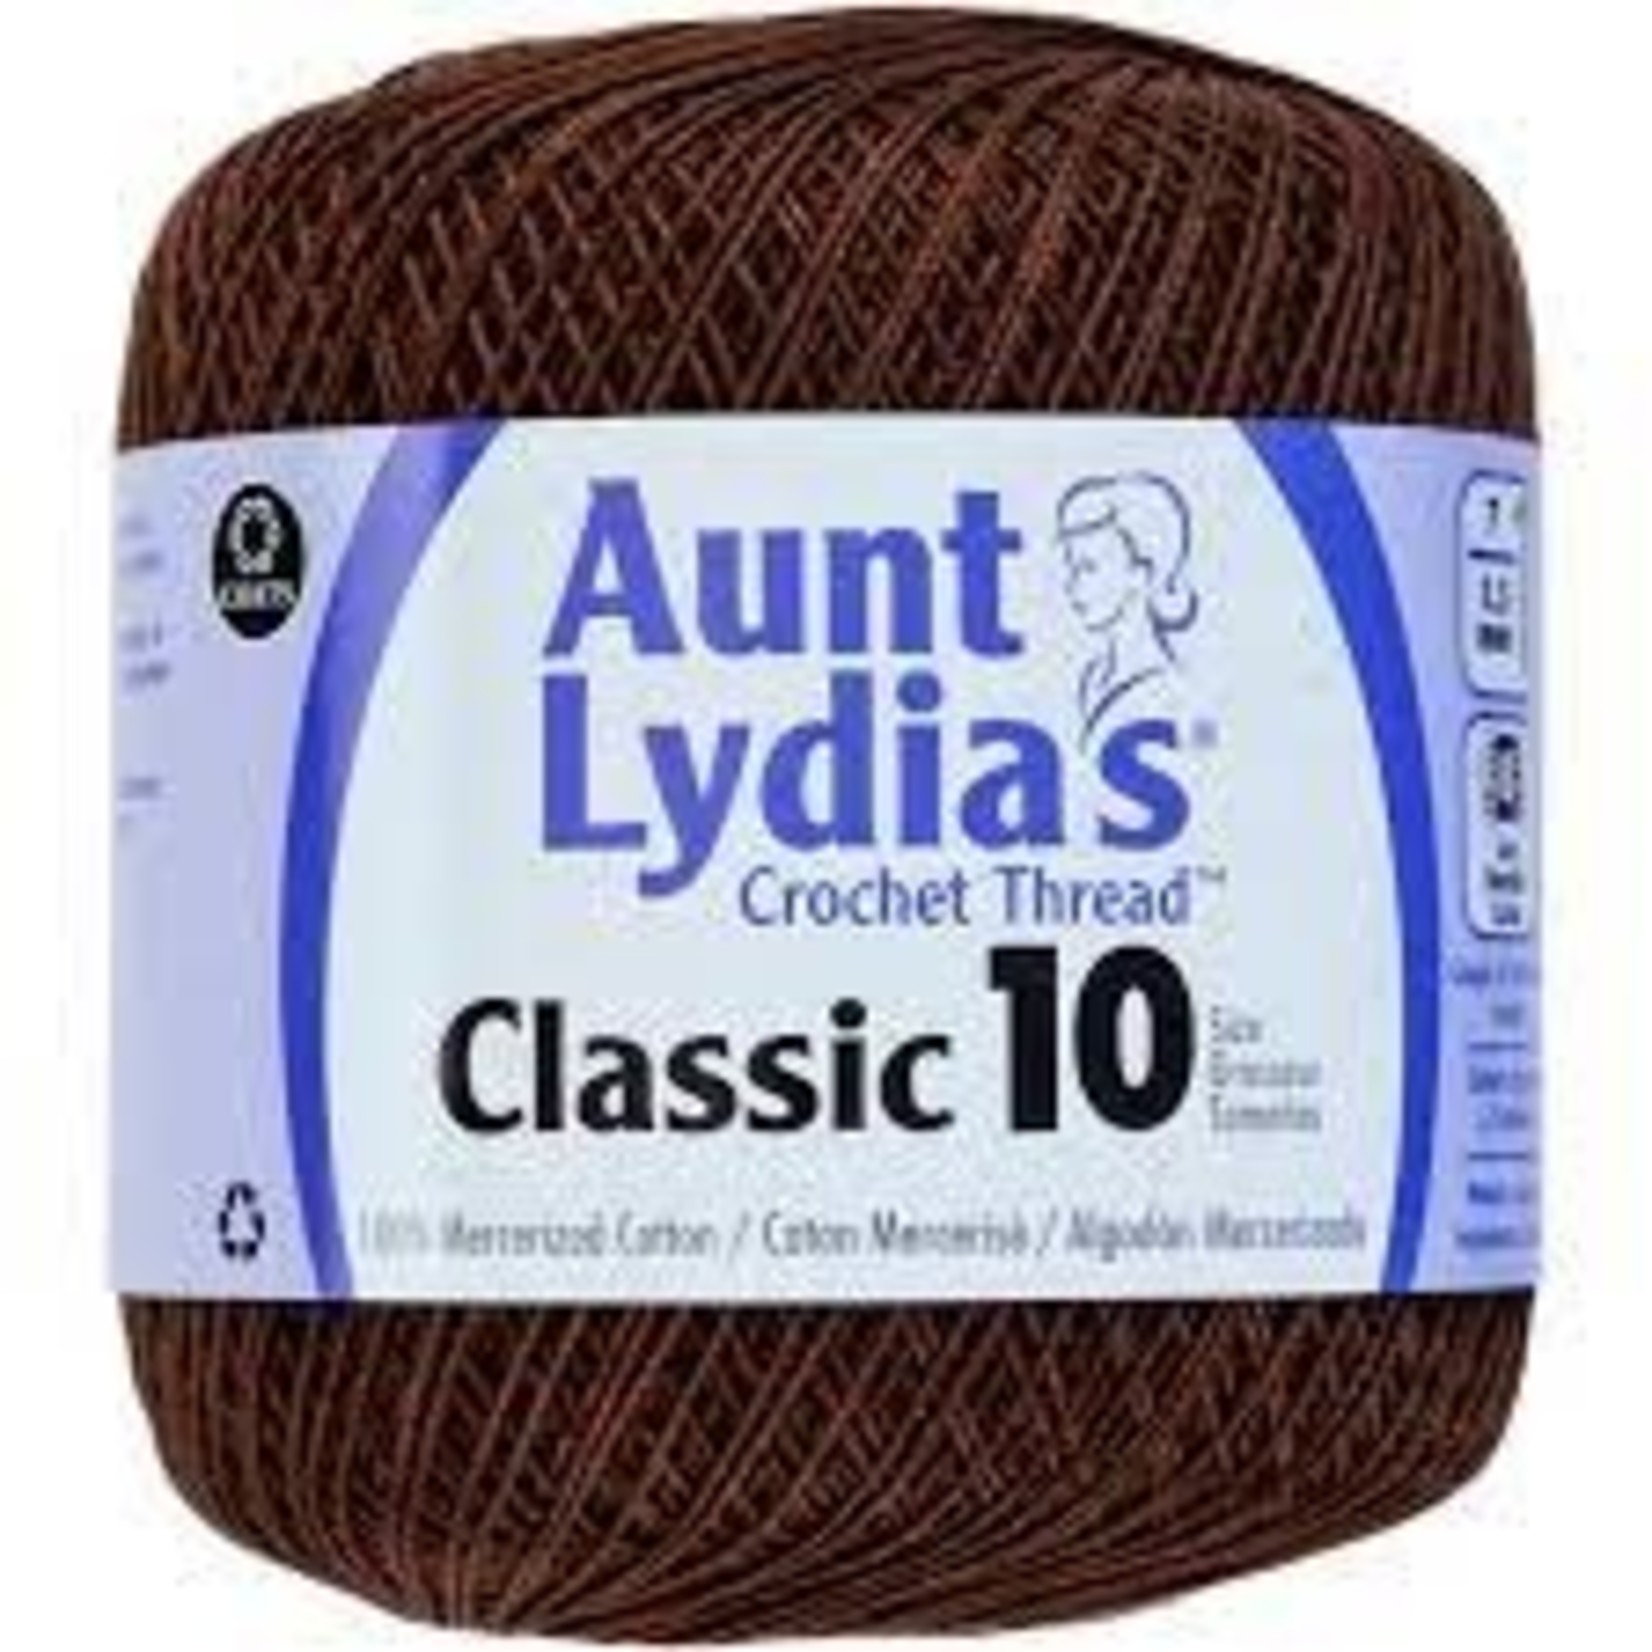 AUNT LYDIA'S CLASSIC 10 CROCHET THREAD - FUDGE BROWN